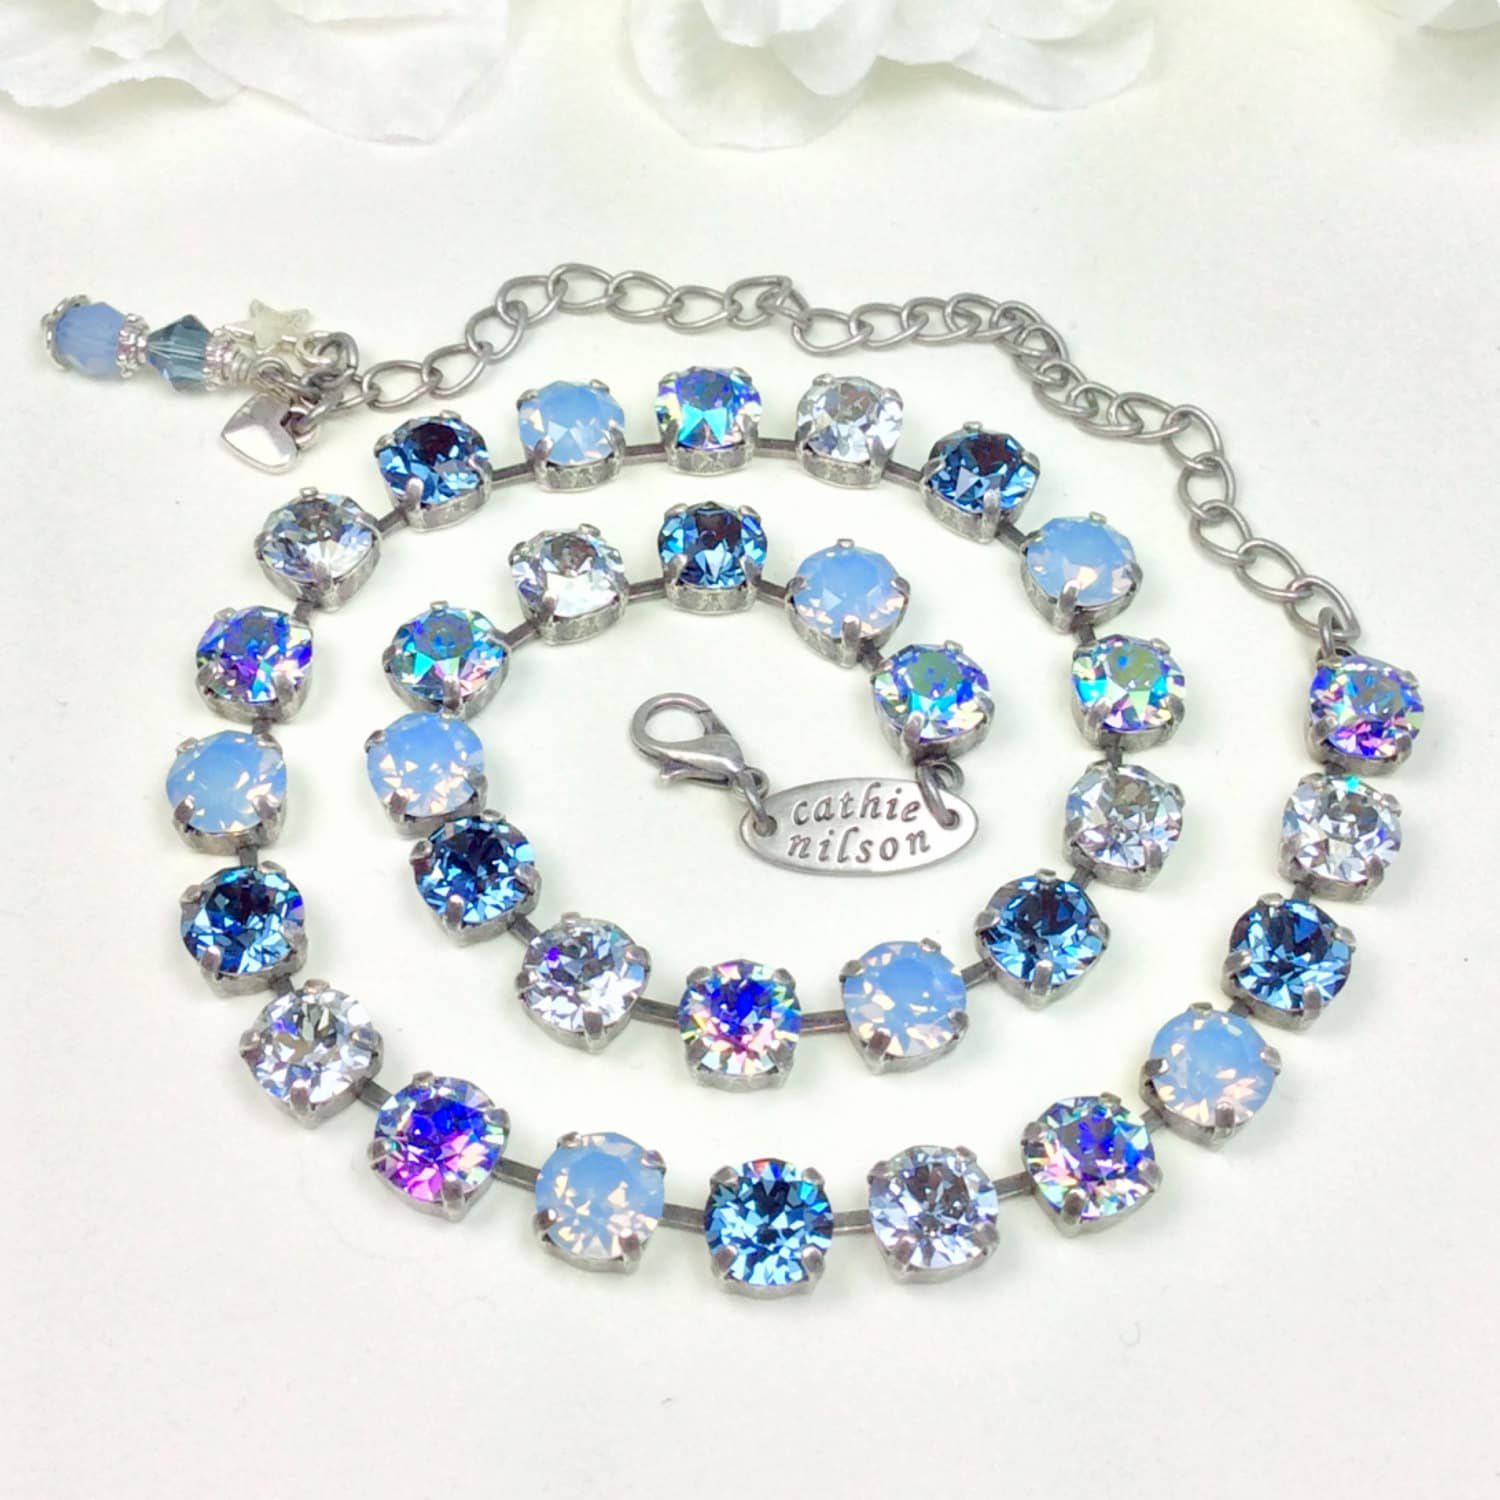 Swarovski Crystal 8.5mm Necklace    Designer Inspired  - "Faded Denim Blues" - Pretty Denim Blue, Lt. Sapphire AB  -   FREE SHIPPING